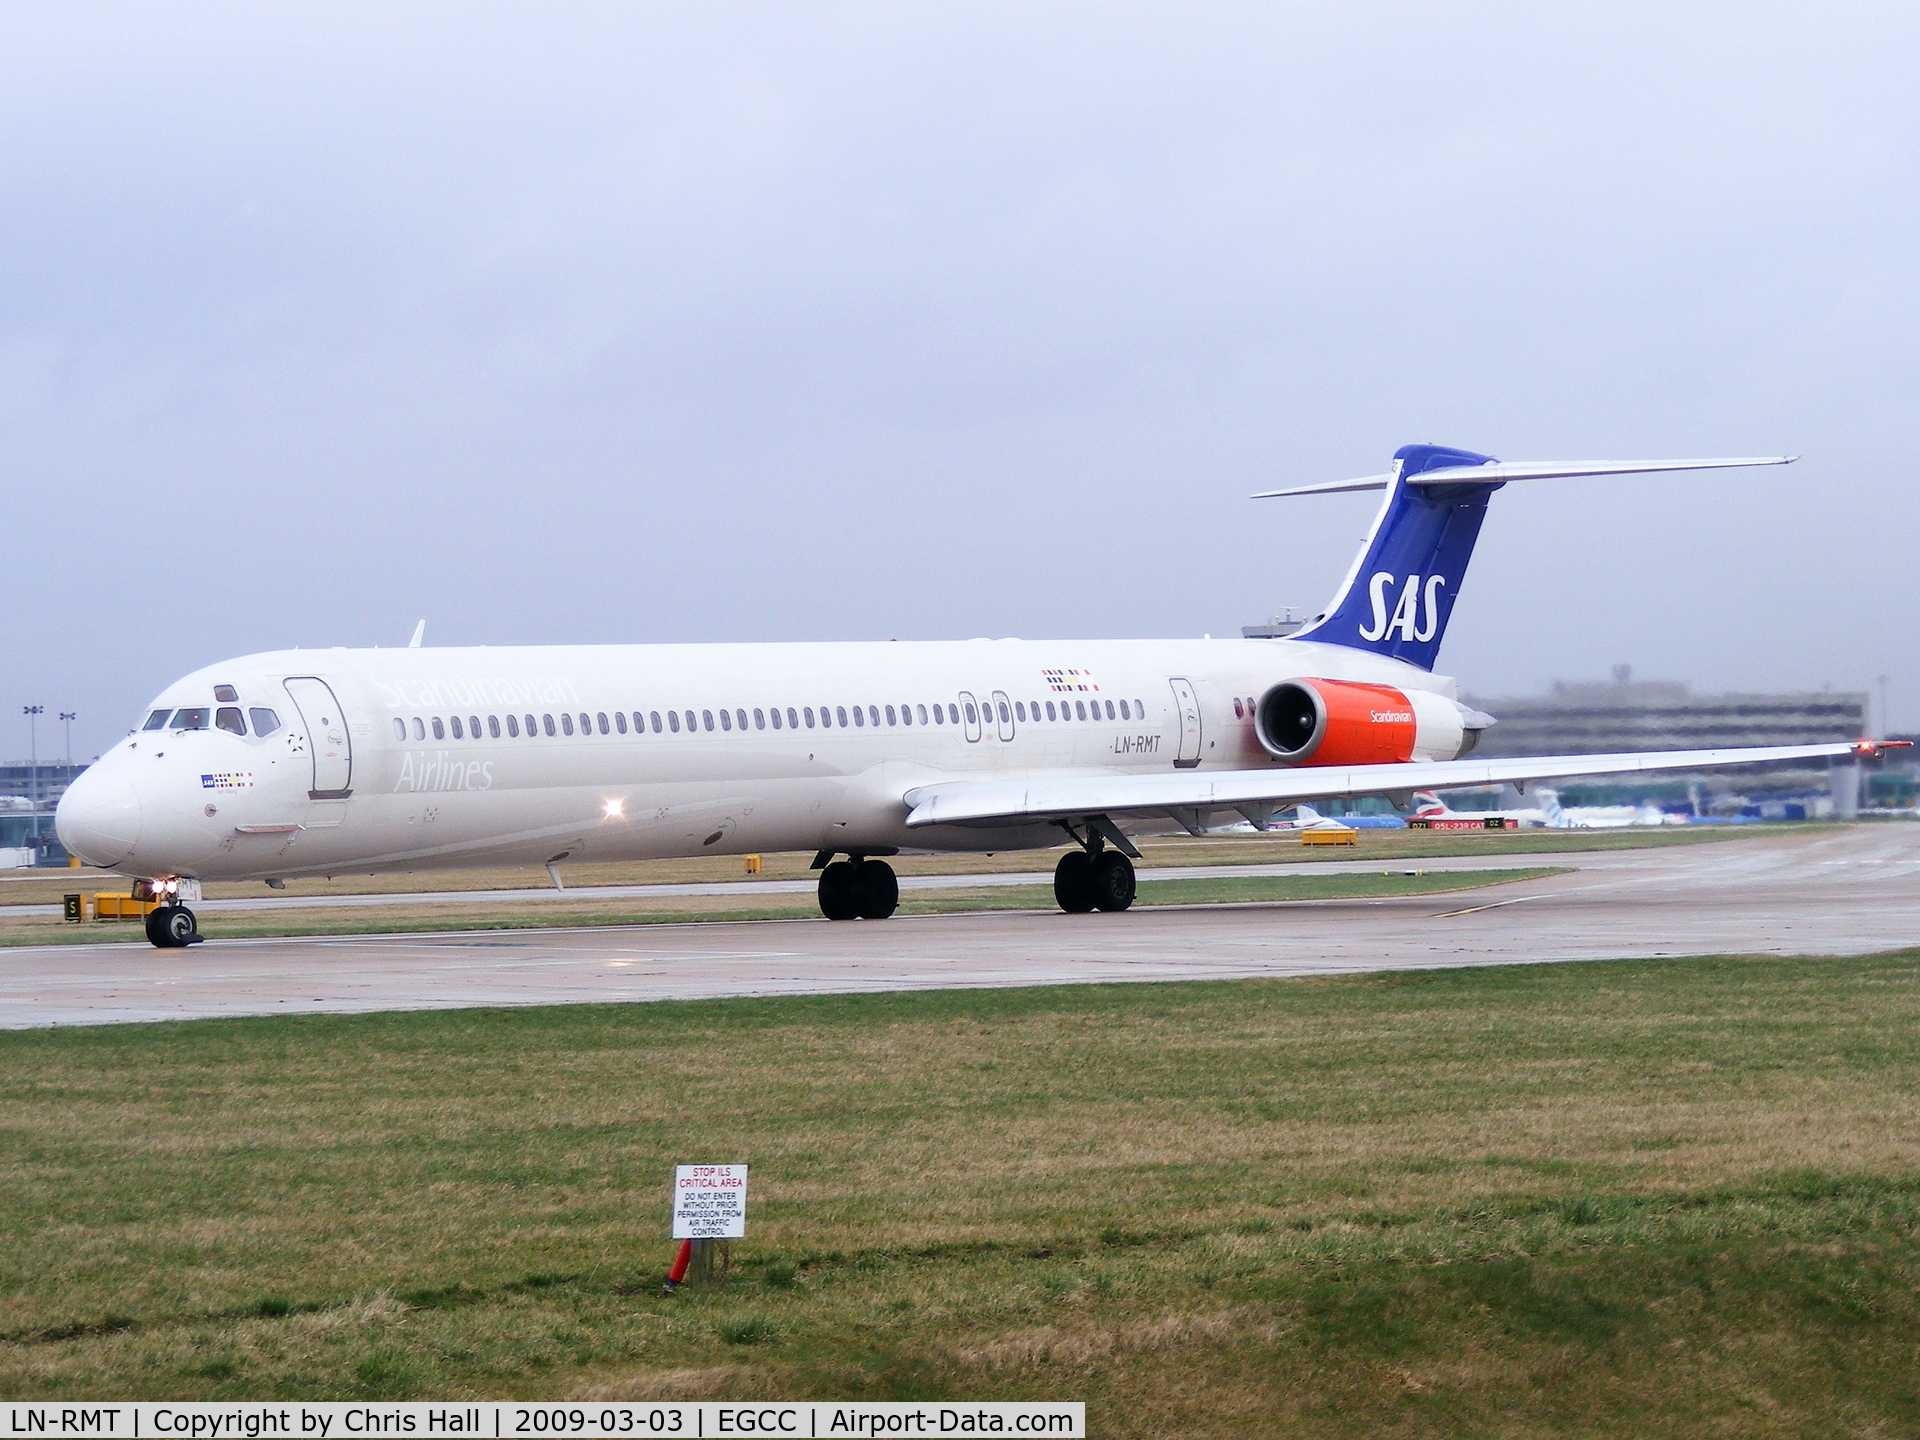 LN-RMT, 1991 McDonnell Douglas MD-82 (DC-9-82) C/N 53001, Scandinavian